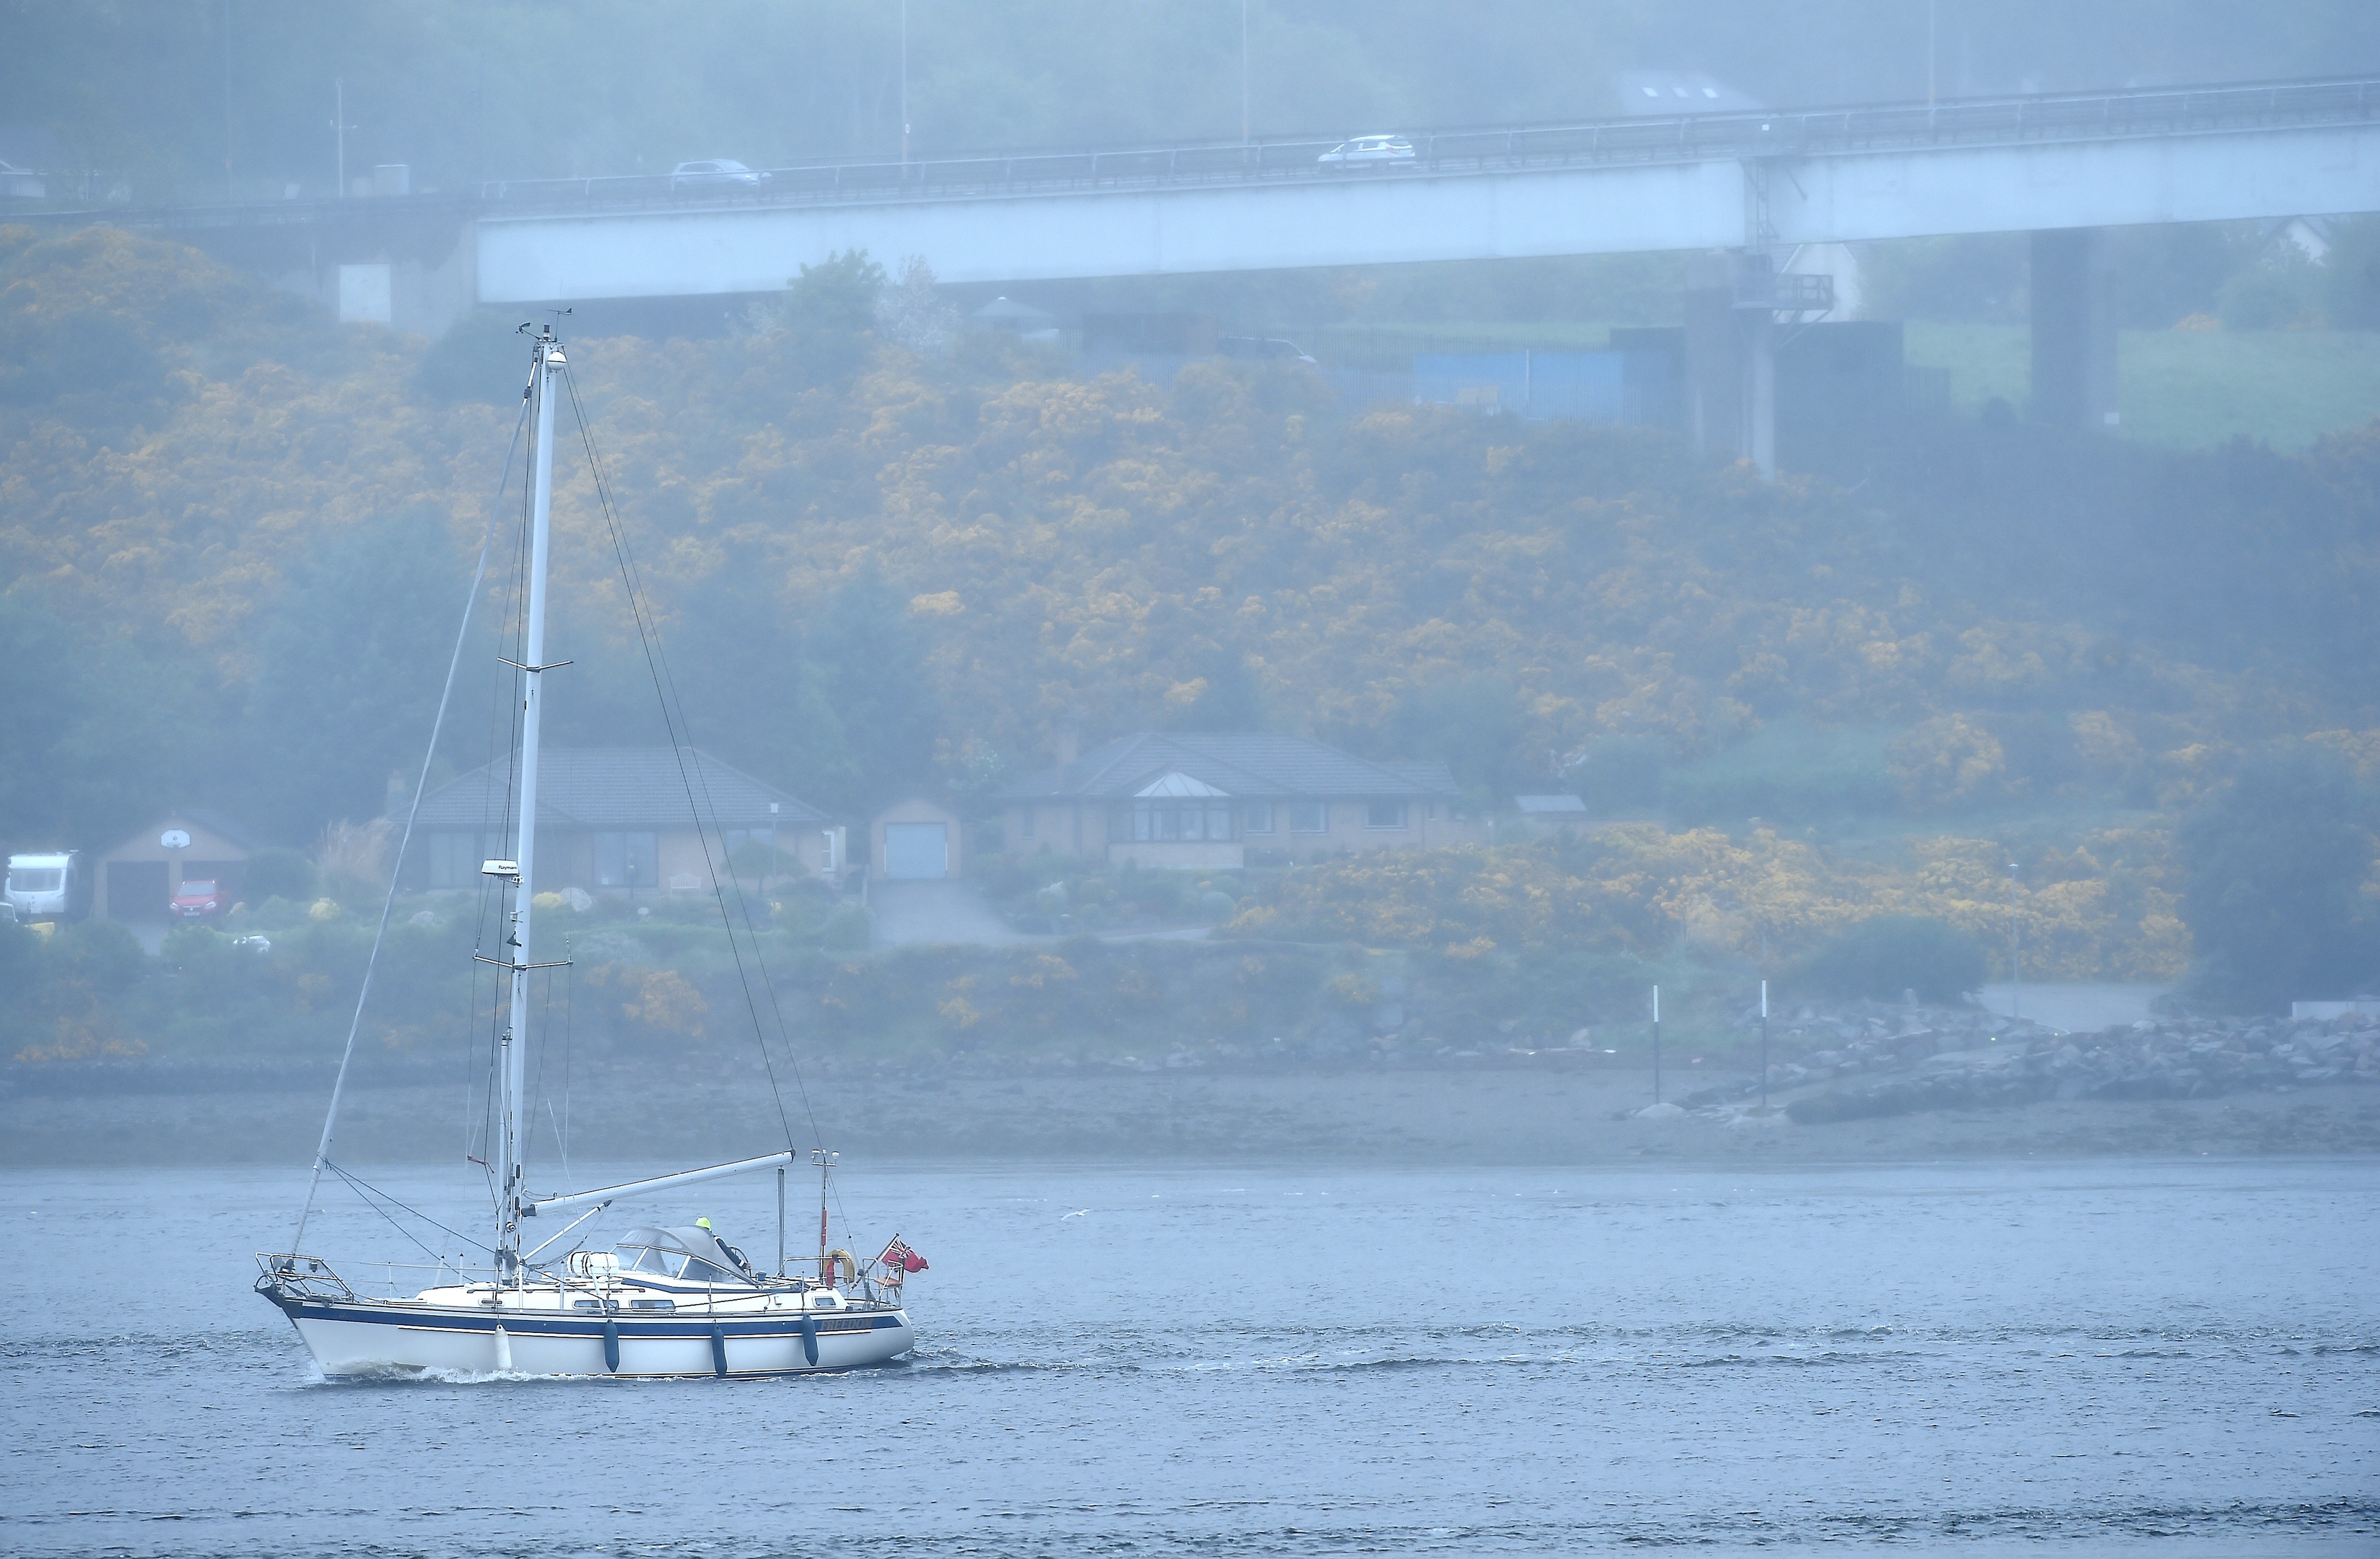 The yacht making its way past the Kessock Bridge.